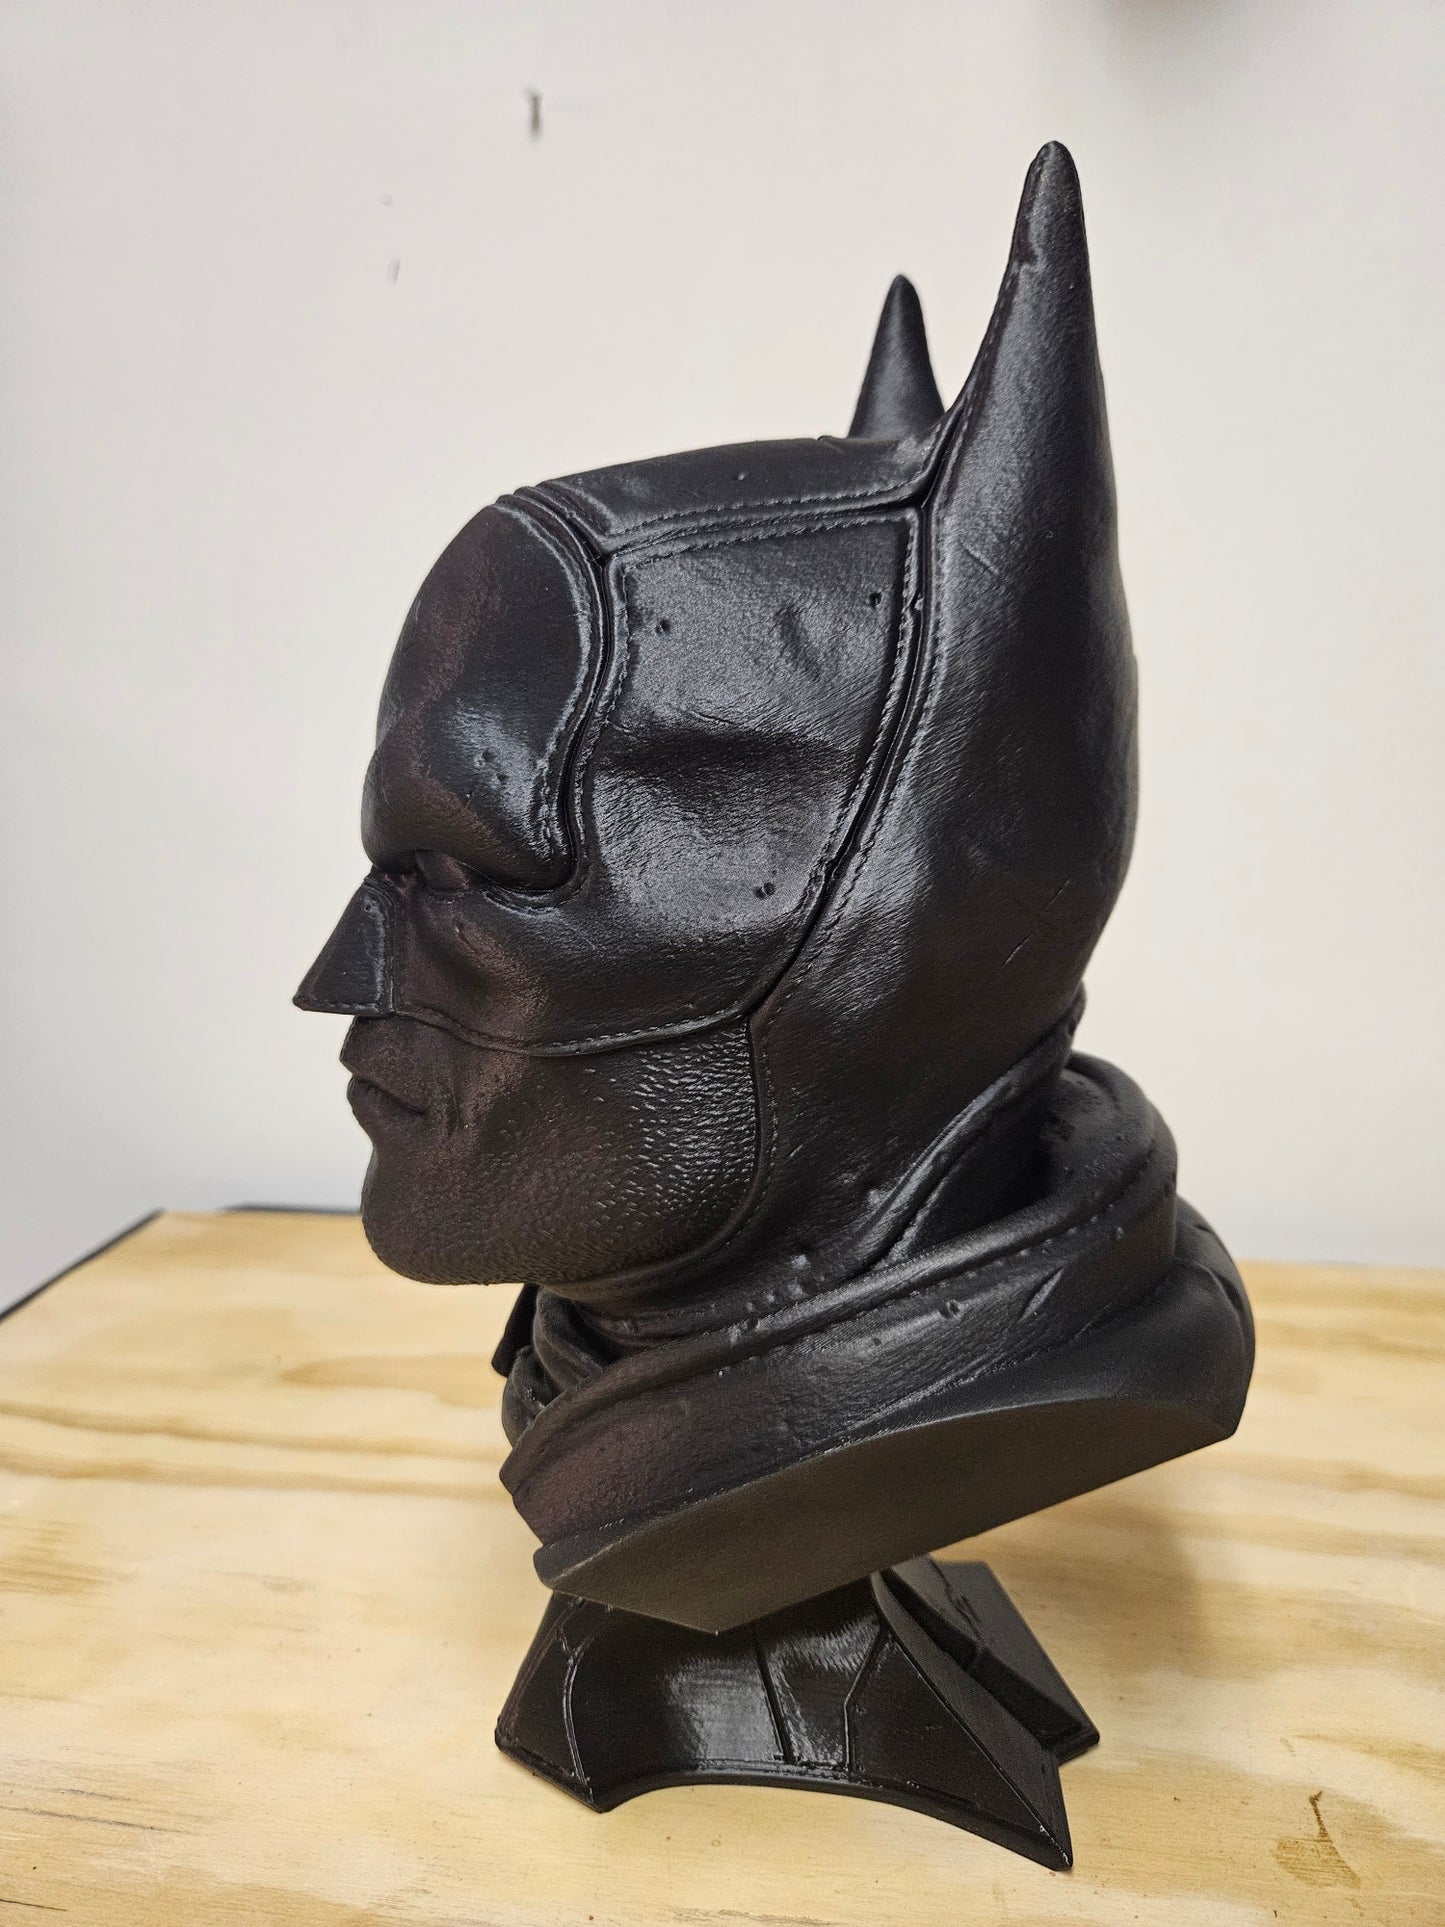 The Batman head bust statue